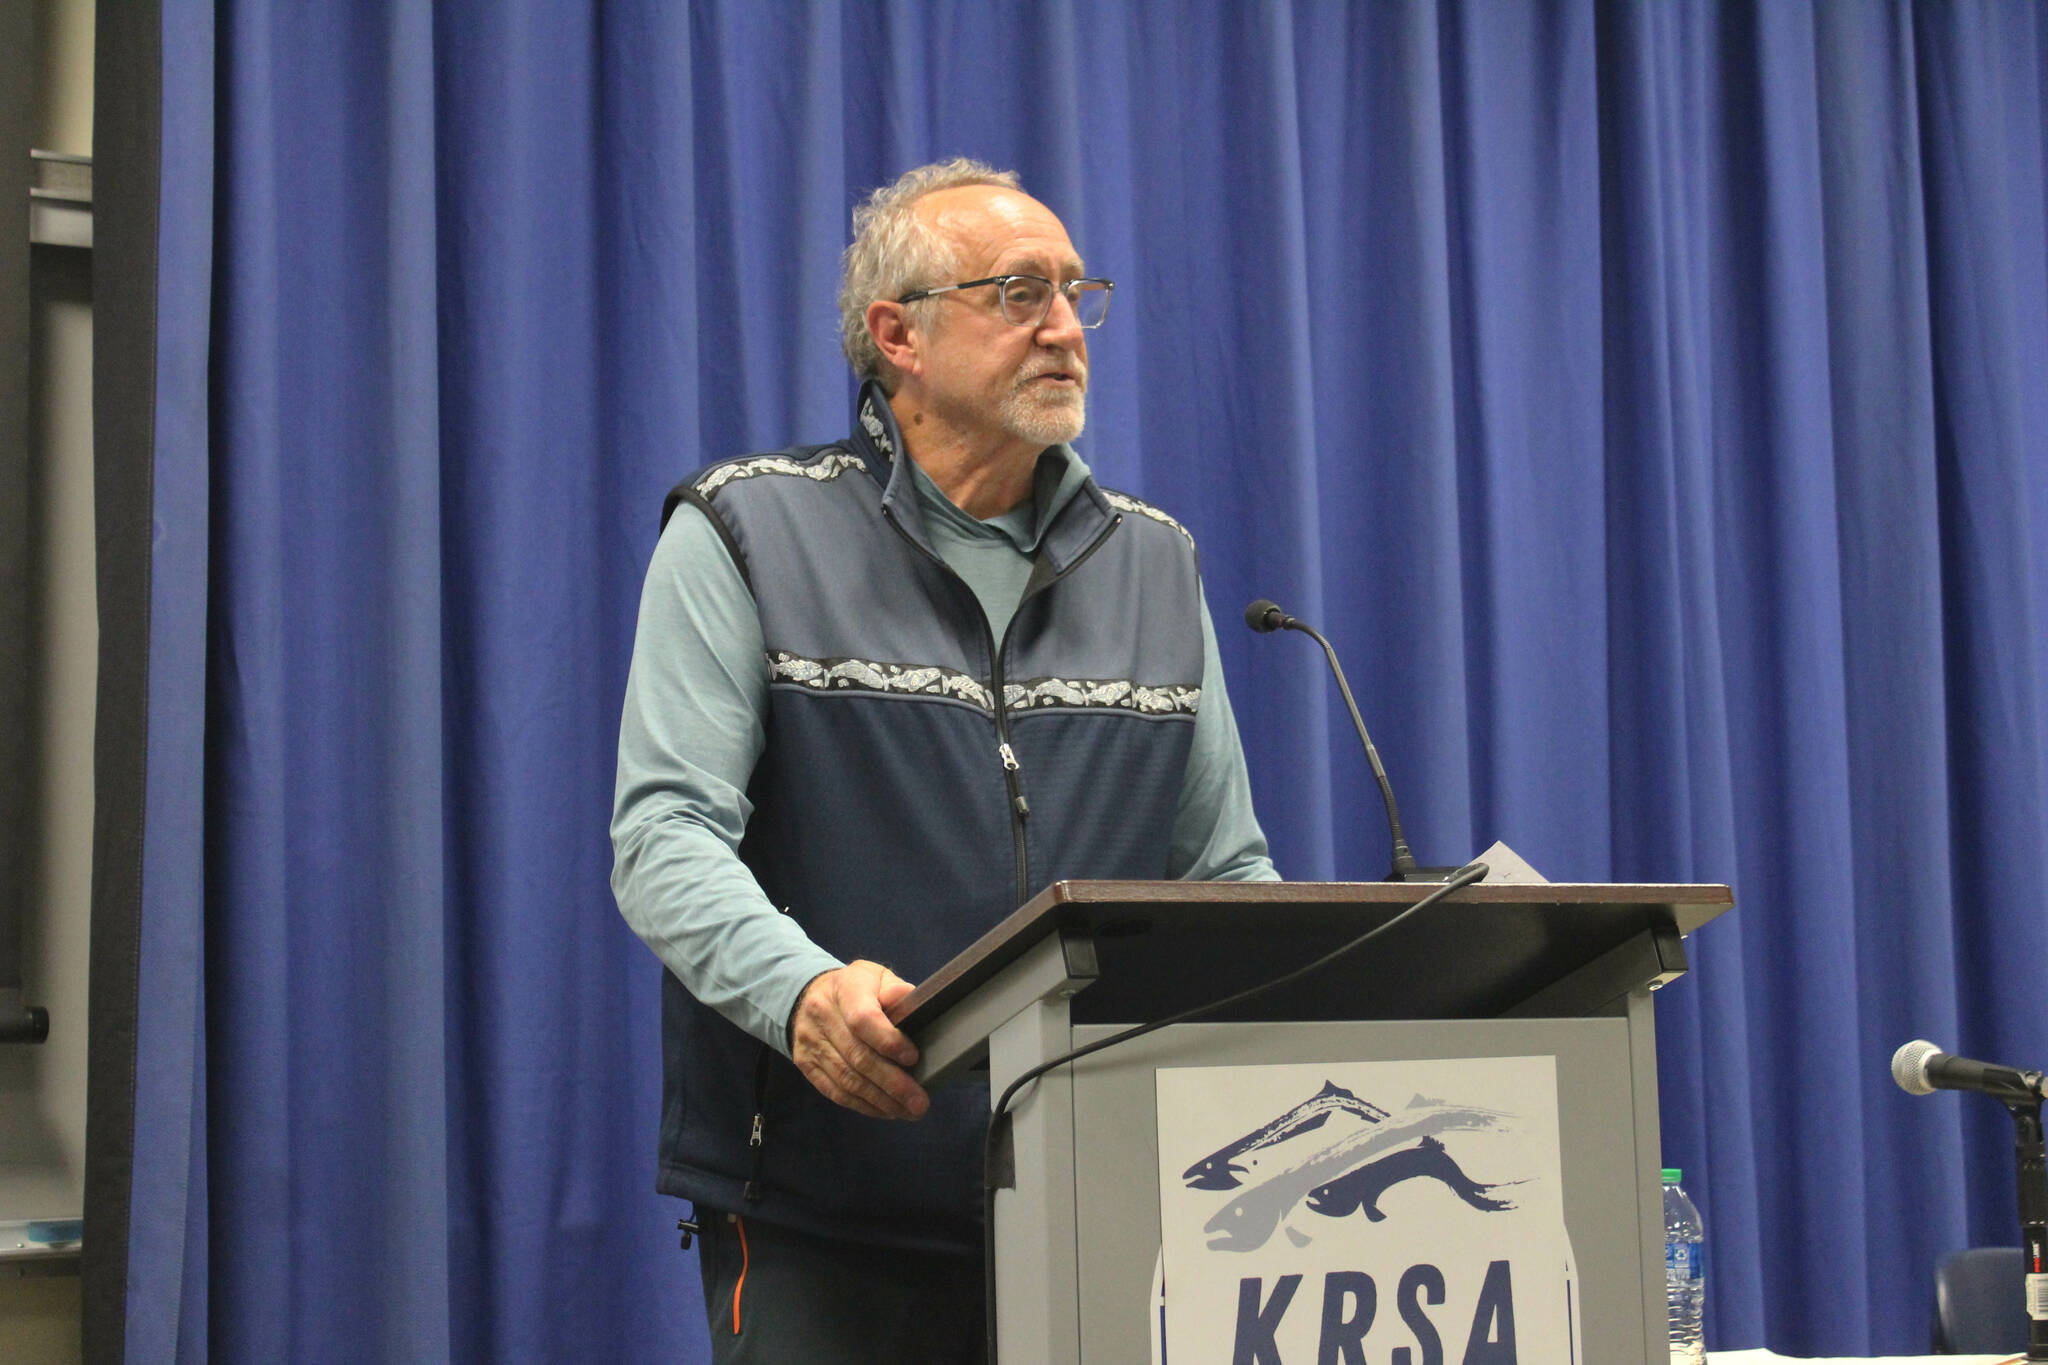 Alaska Department of Fish & Game Commissioner Doug Vincent-Lang speaks at the Kenai Classic Roundtable at Kenai Peninsula College on Wednesday, Aug. 17, 2022 near Soldotna, Alaska. (Ashlyn O’Hara/Peninsula Clarion)